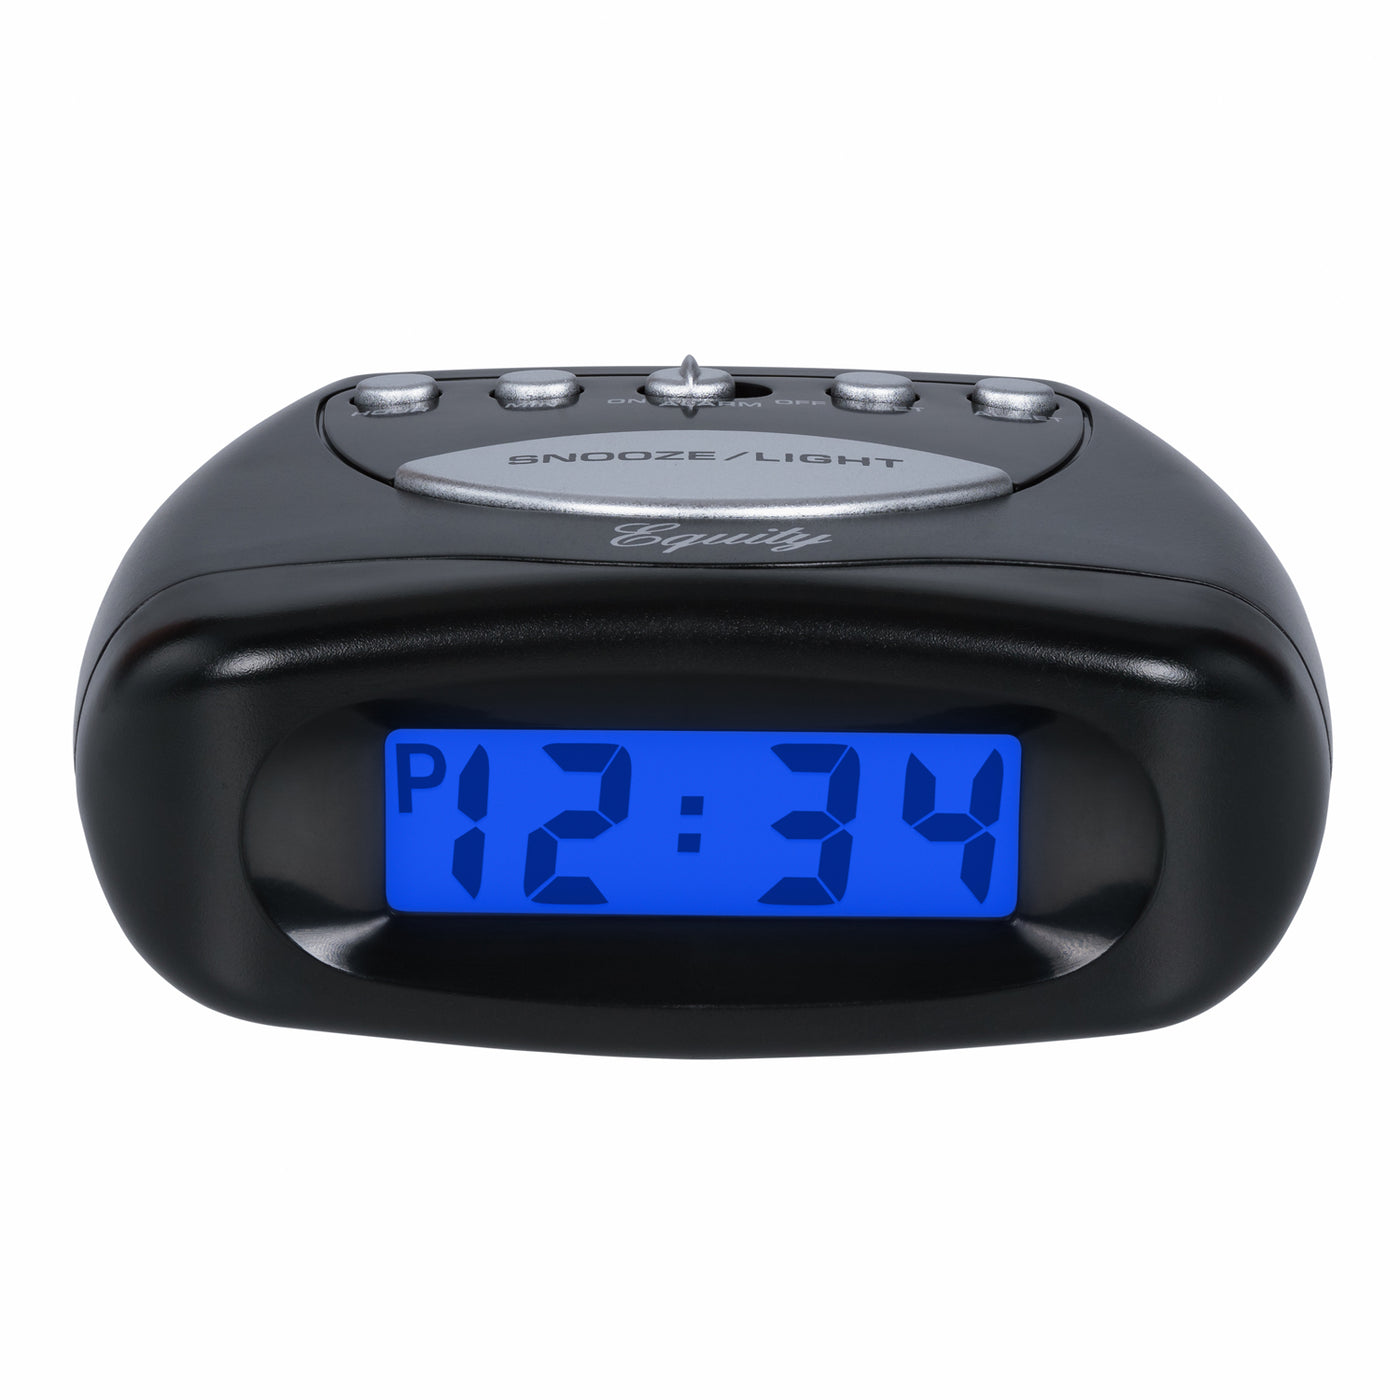 31003 alarm clock with backlight